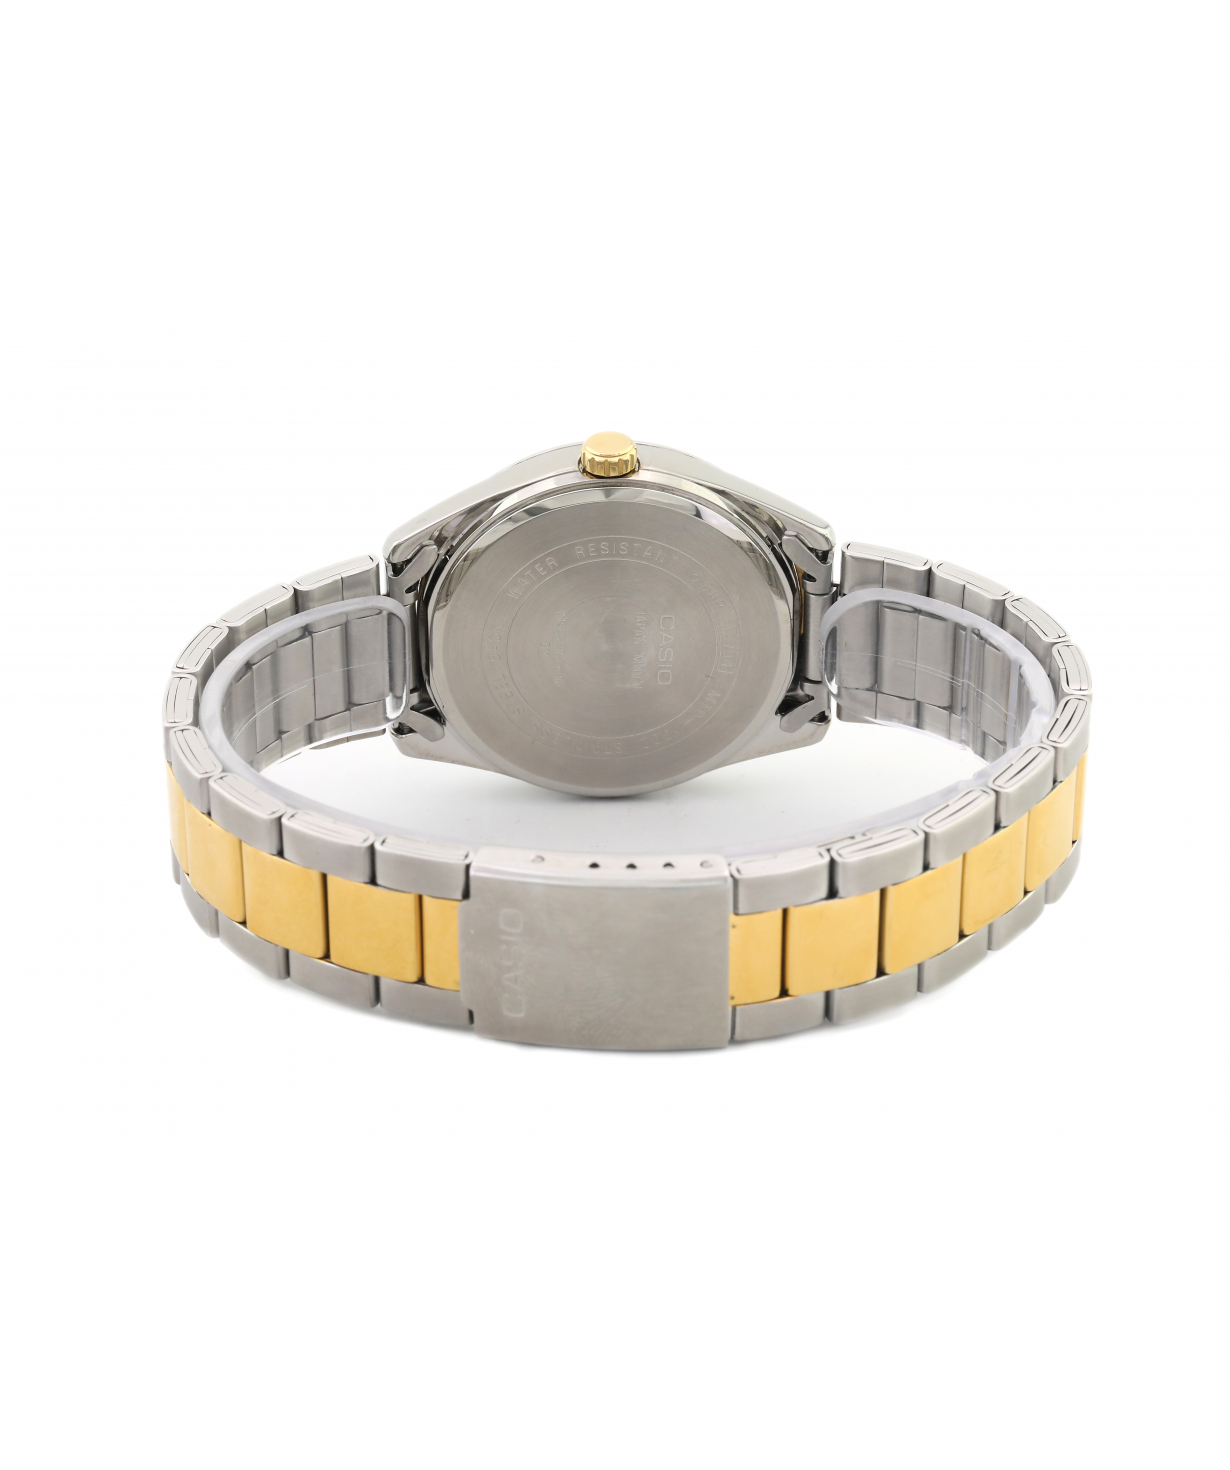 Wristwatch  «Casio» LTP-1302SG-7AVDF